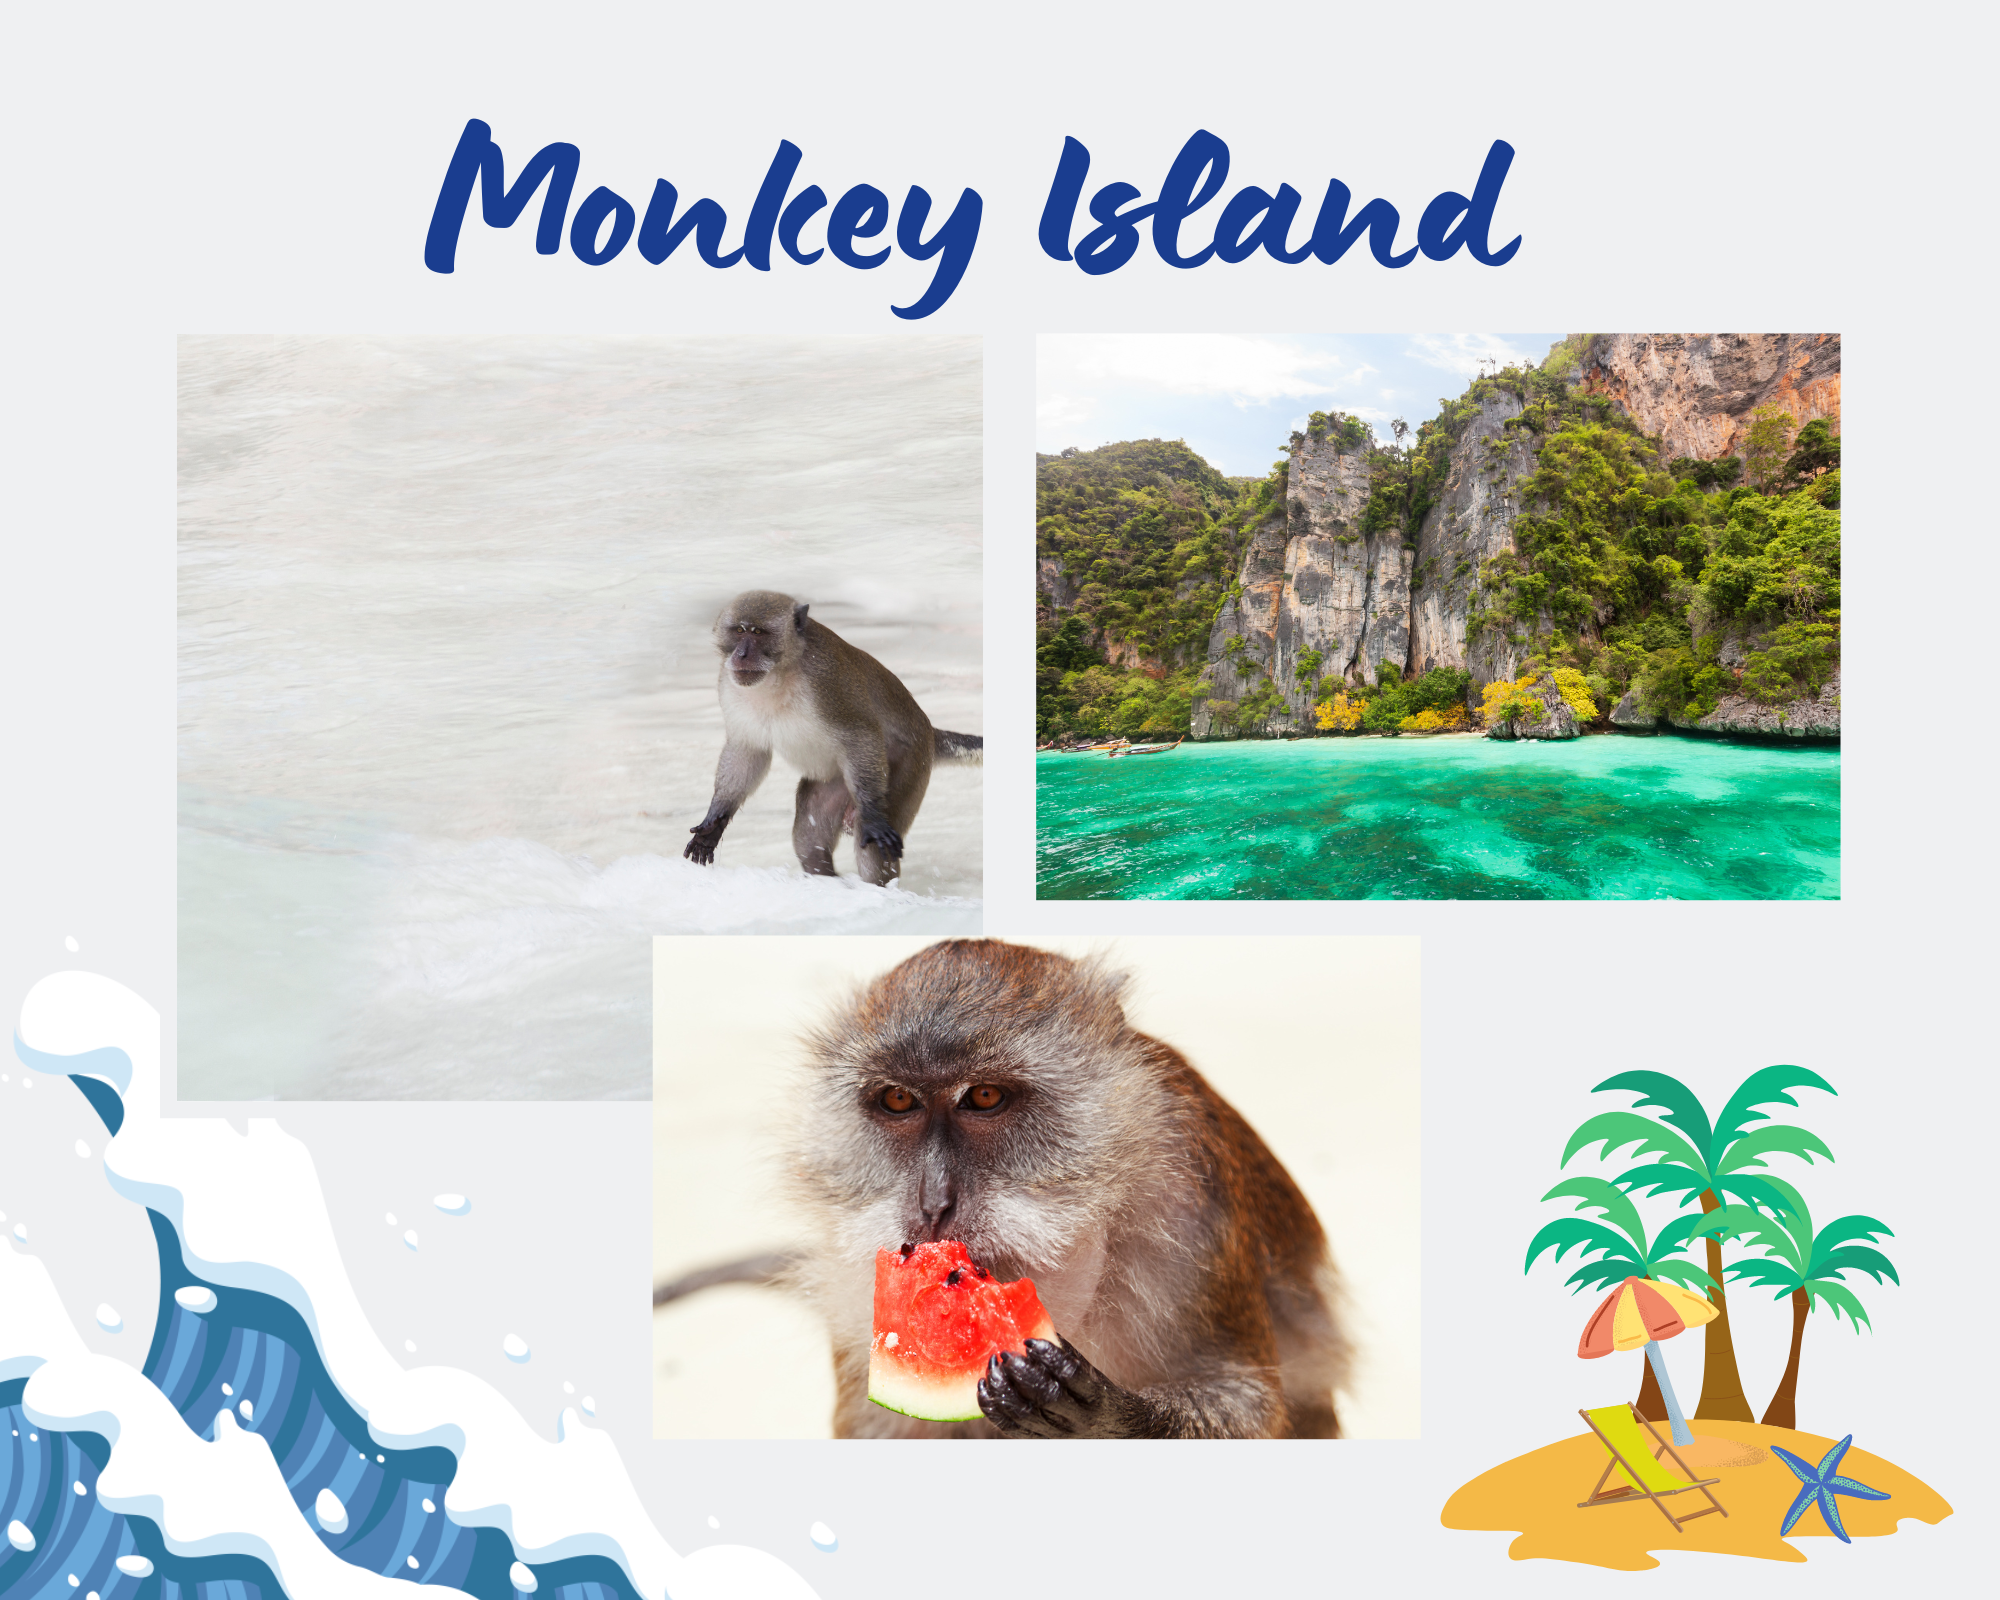 Monkey Island Thailand